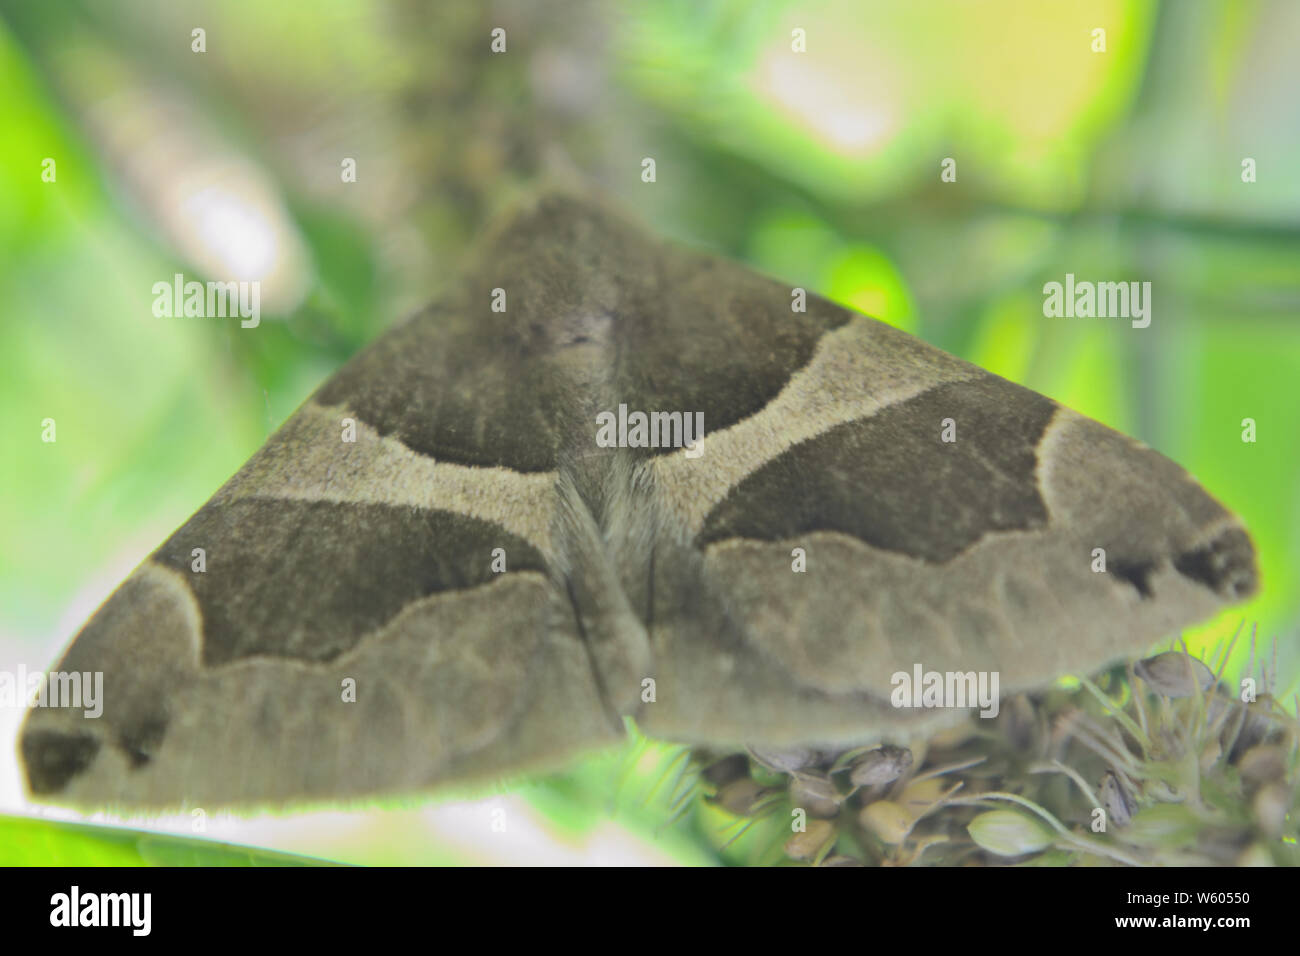 Lepidoptera con dos tonos grises en el césped, polilla o mariposa Foto de stock